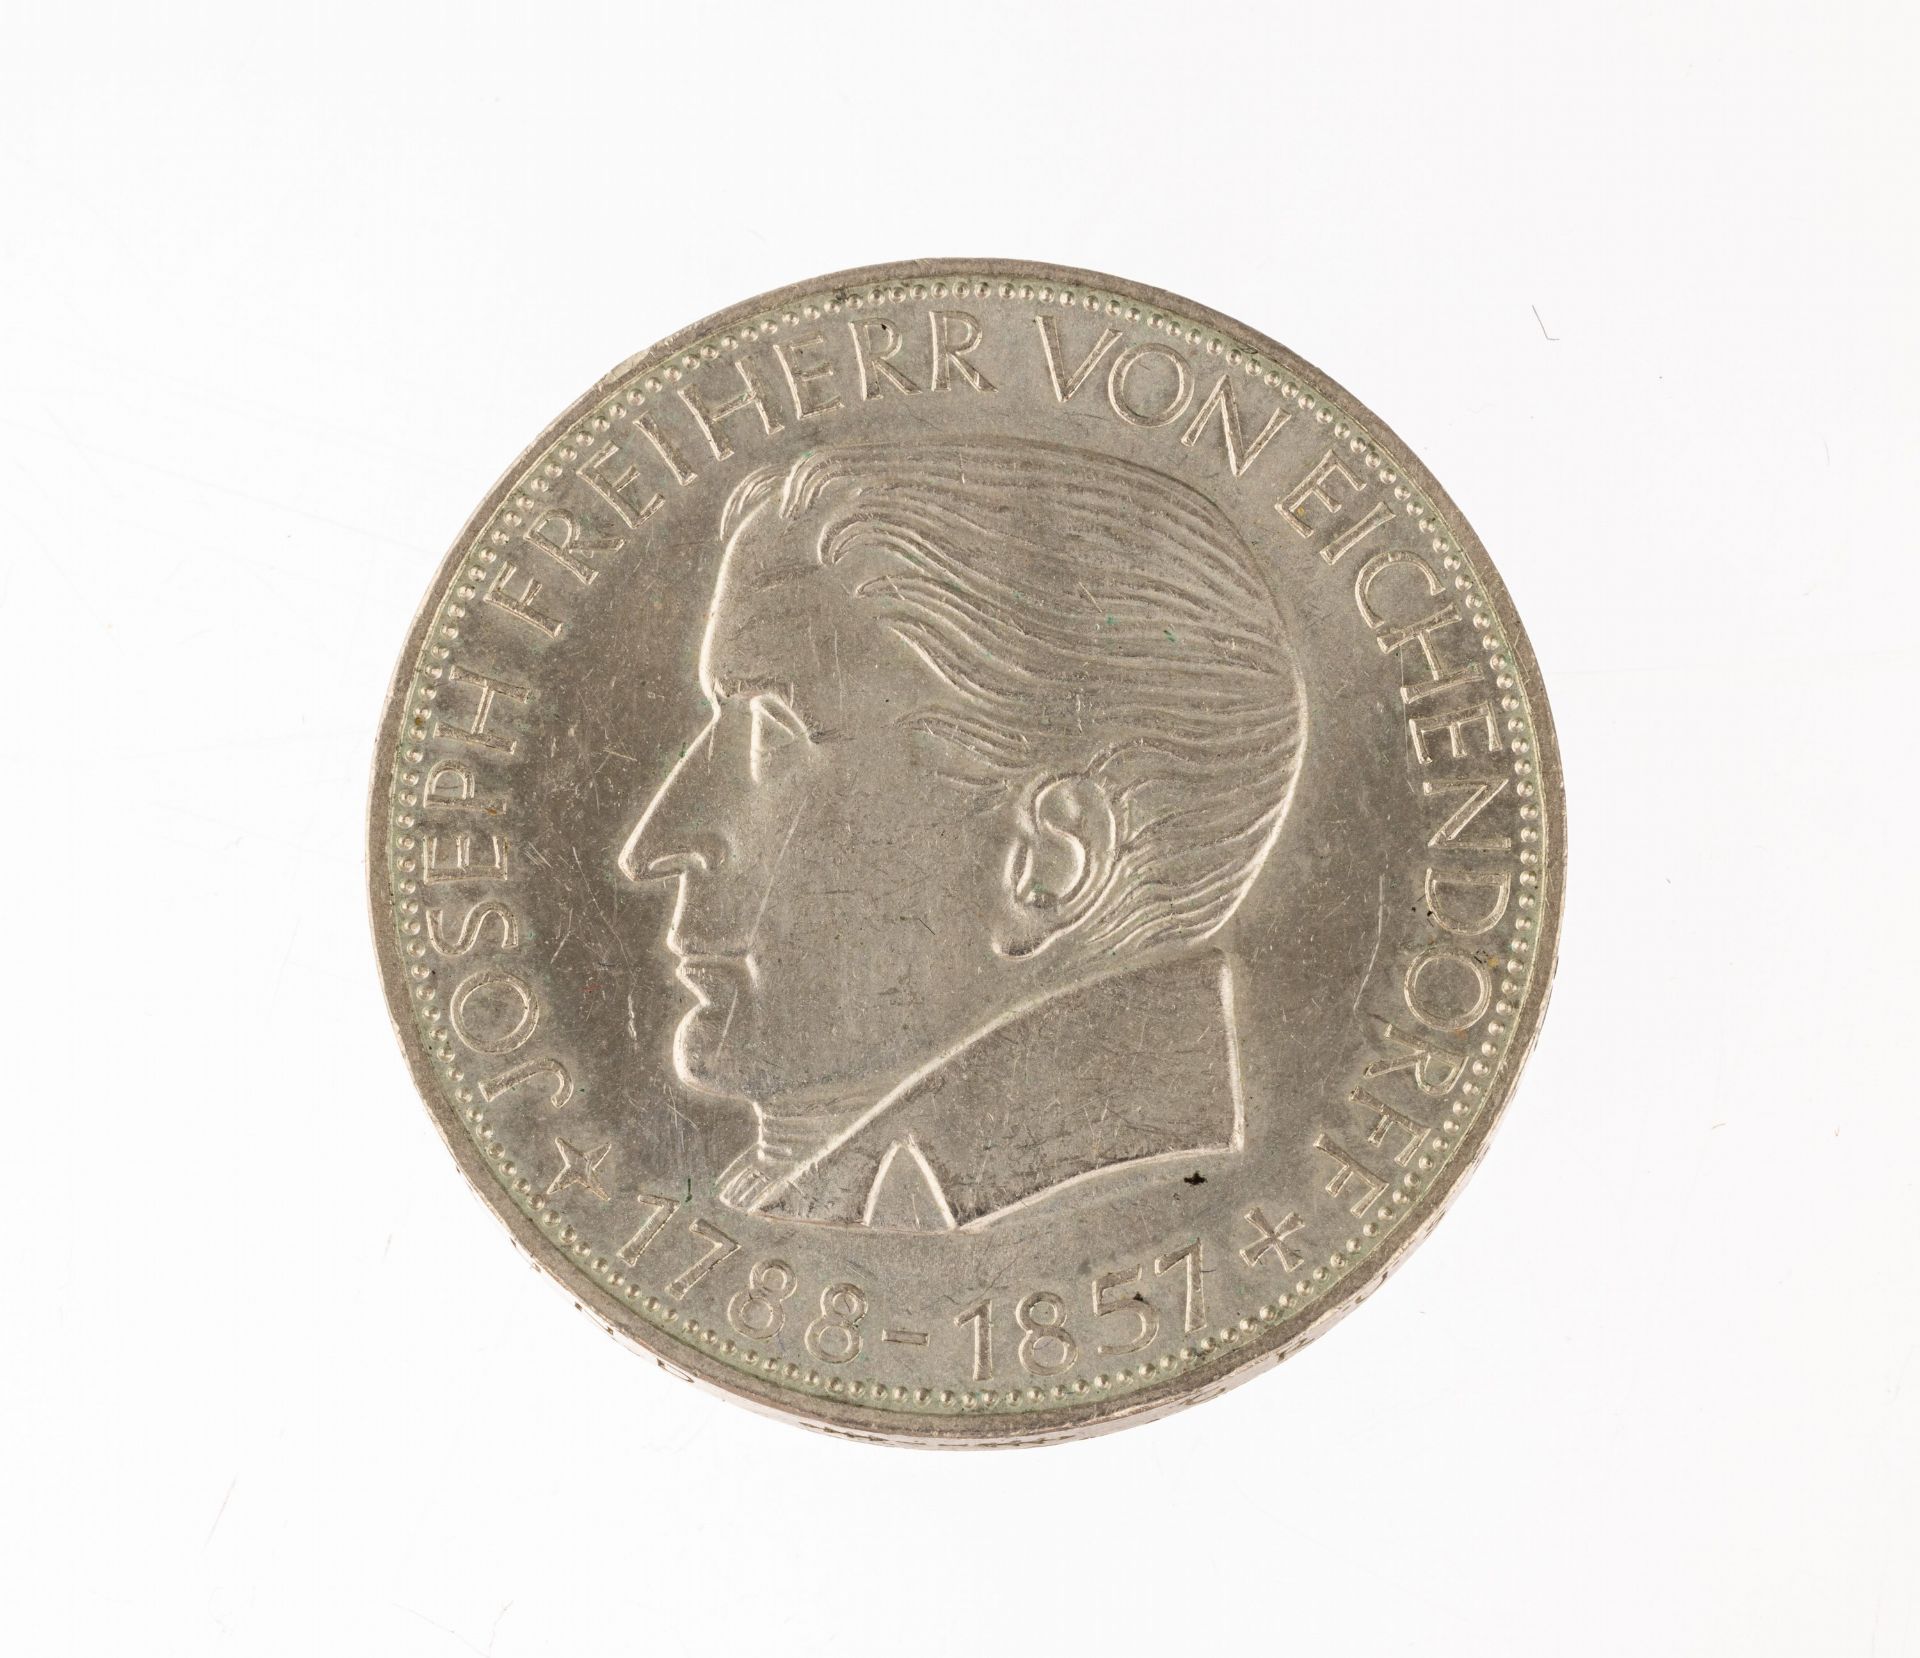 Silbermünze 5 Mark, Deutschland 1957, Freiherr Joseph